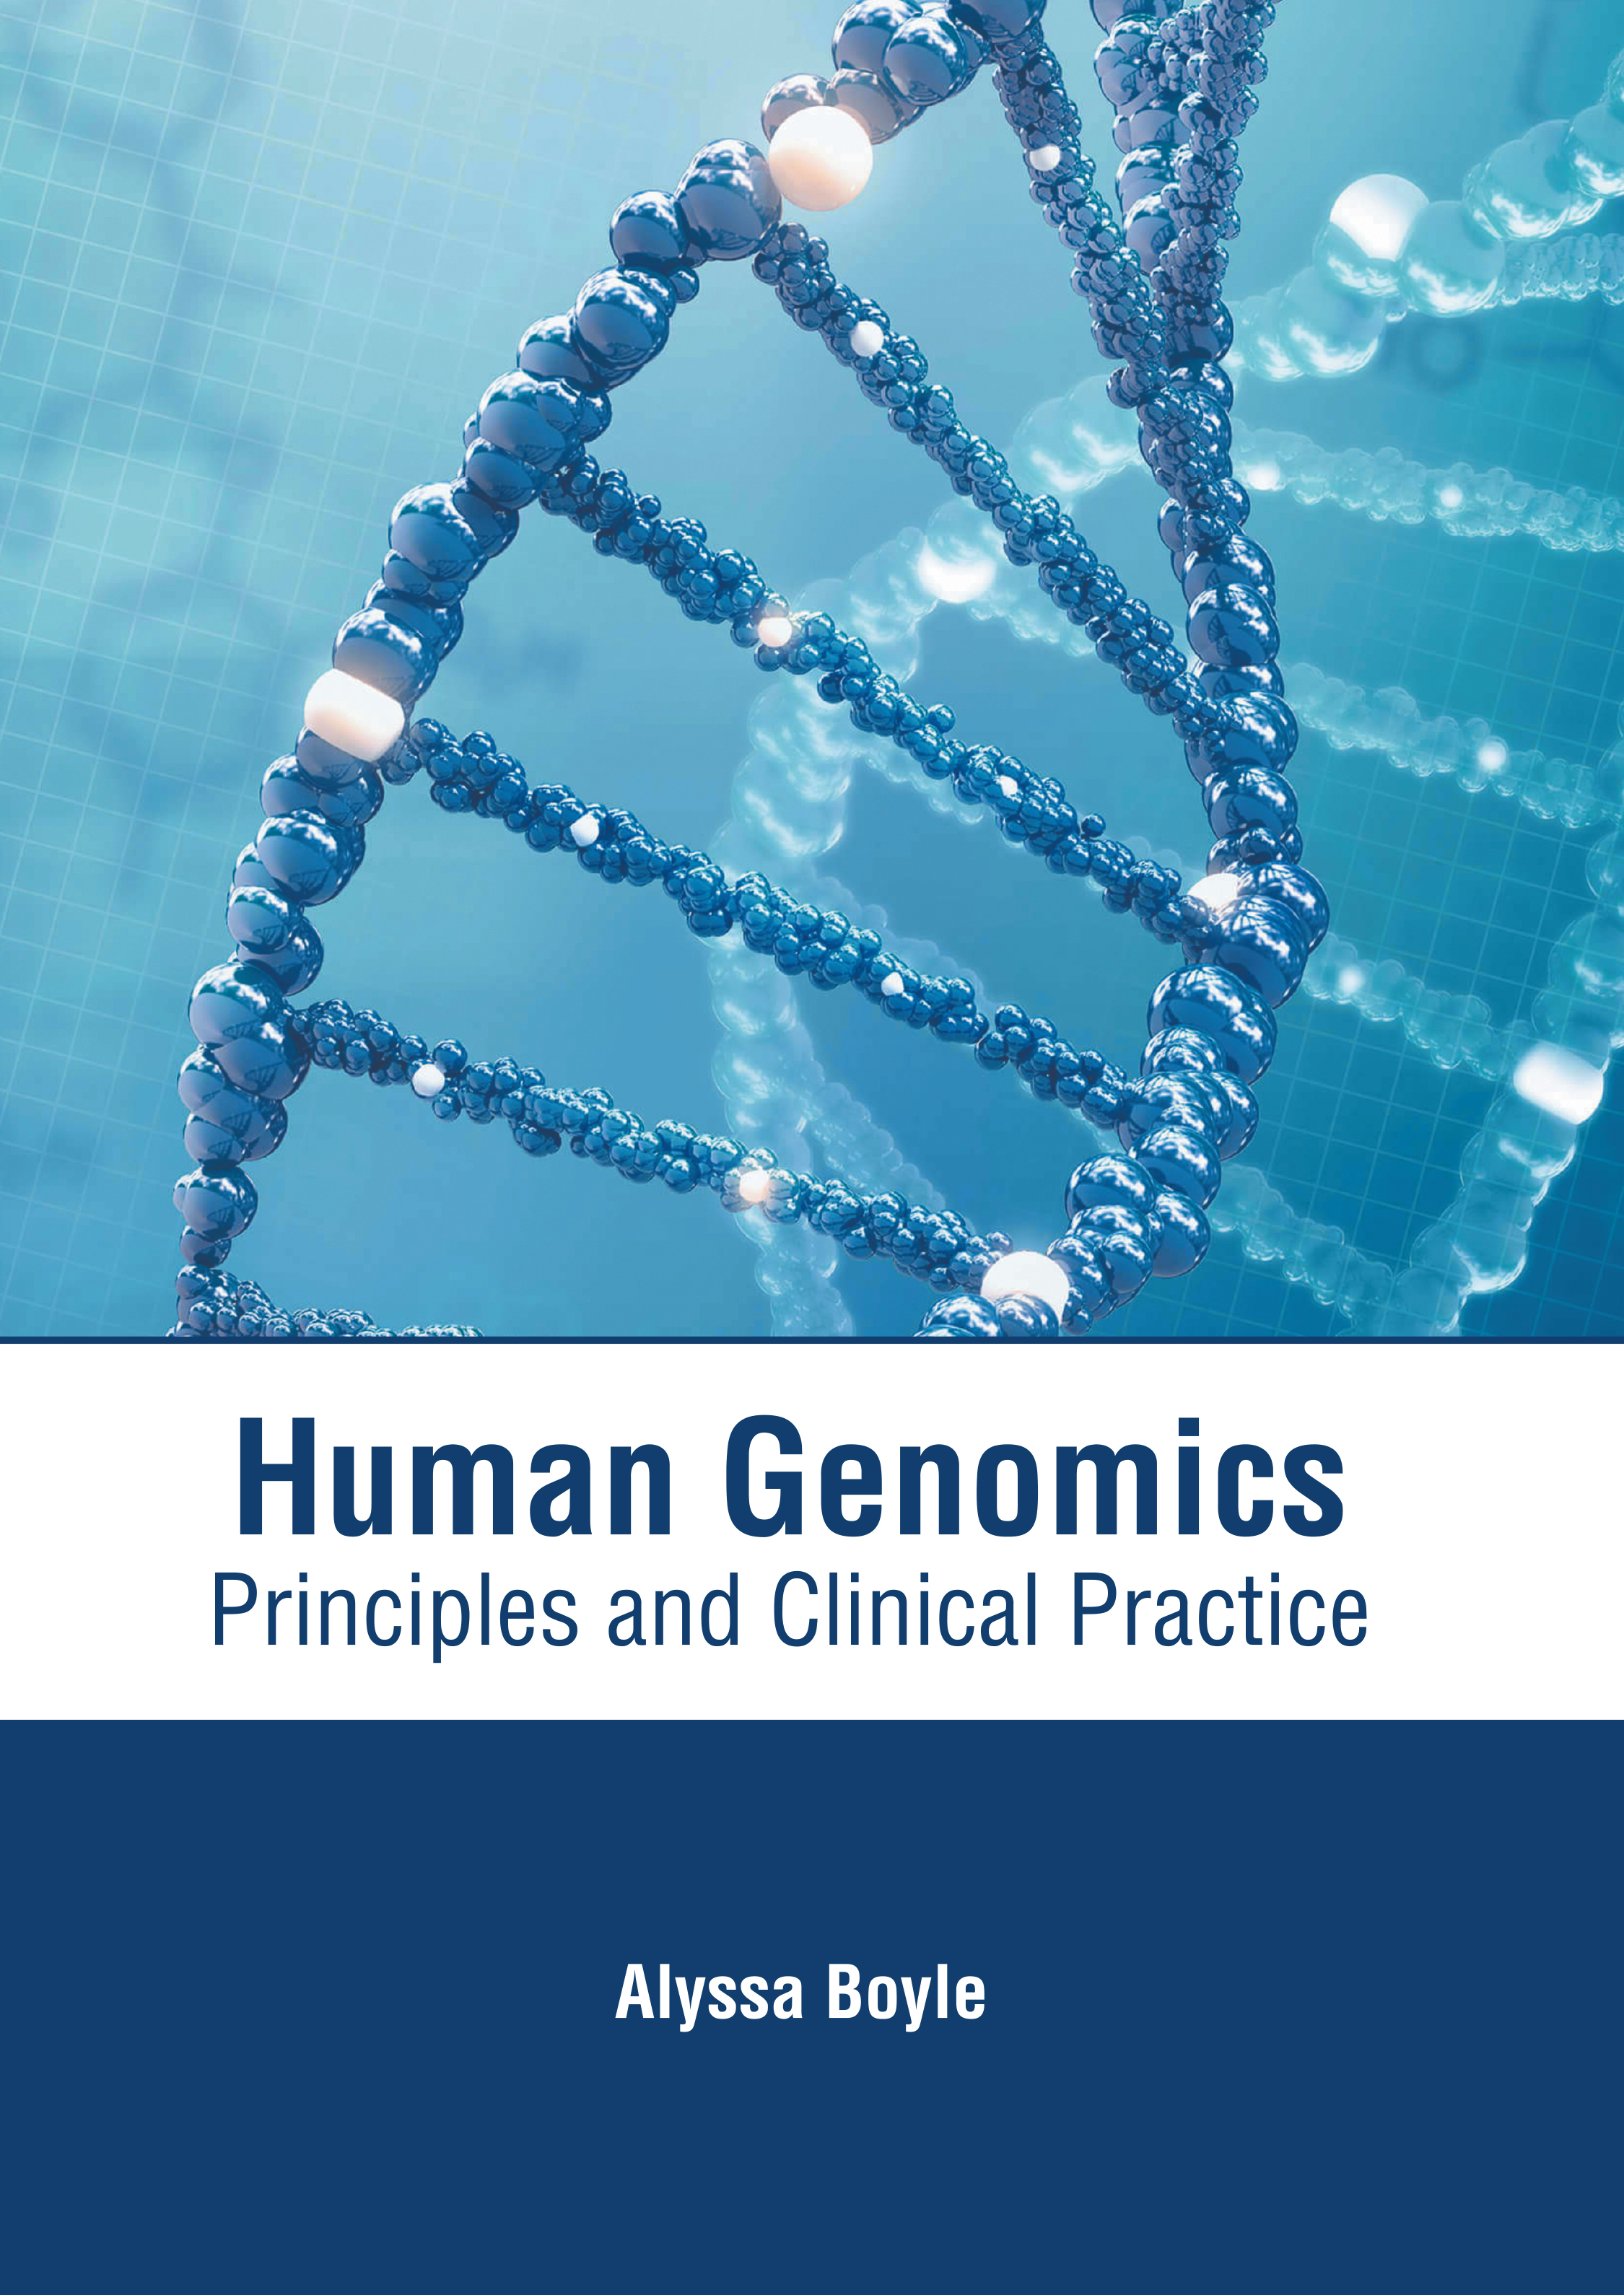 HUMAN GENOMICS: PRINCIPLES AND CLINICAL PRACTICE- ISBN: 9781639272532